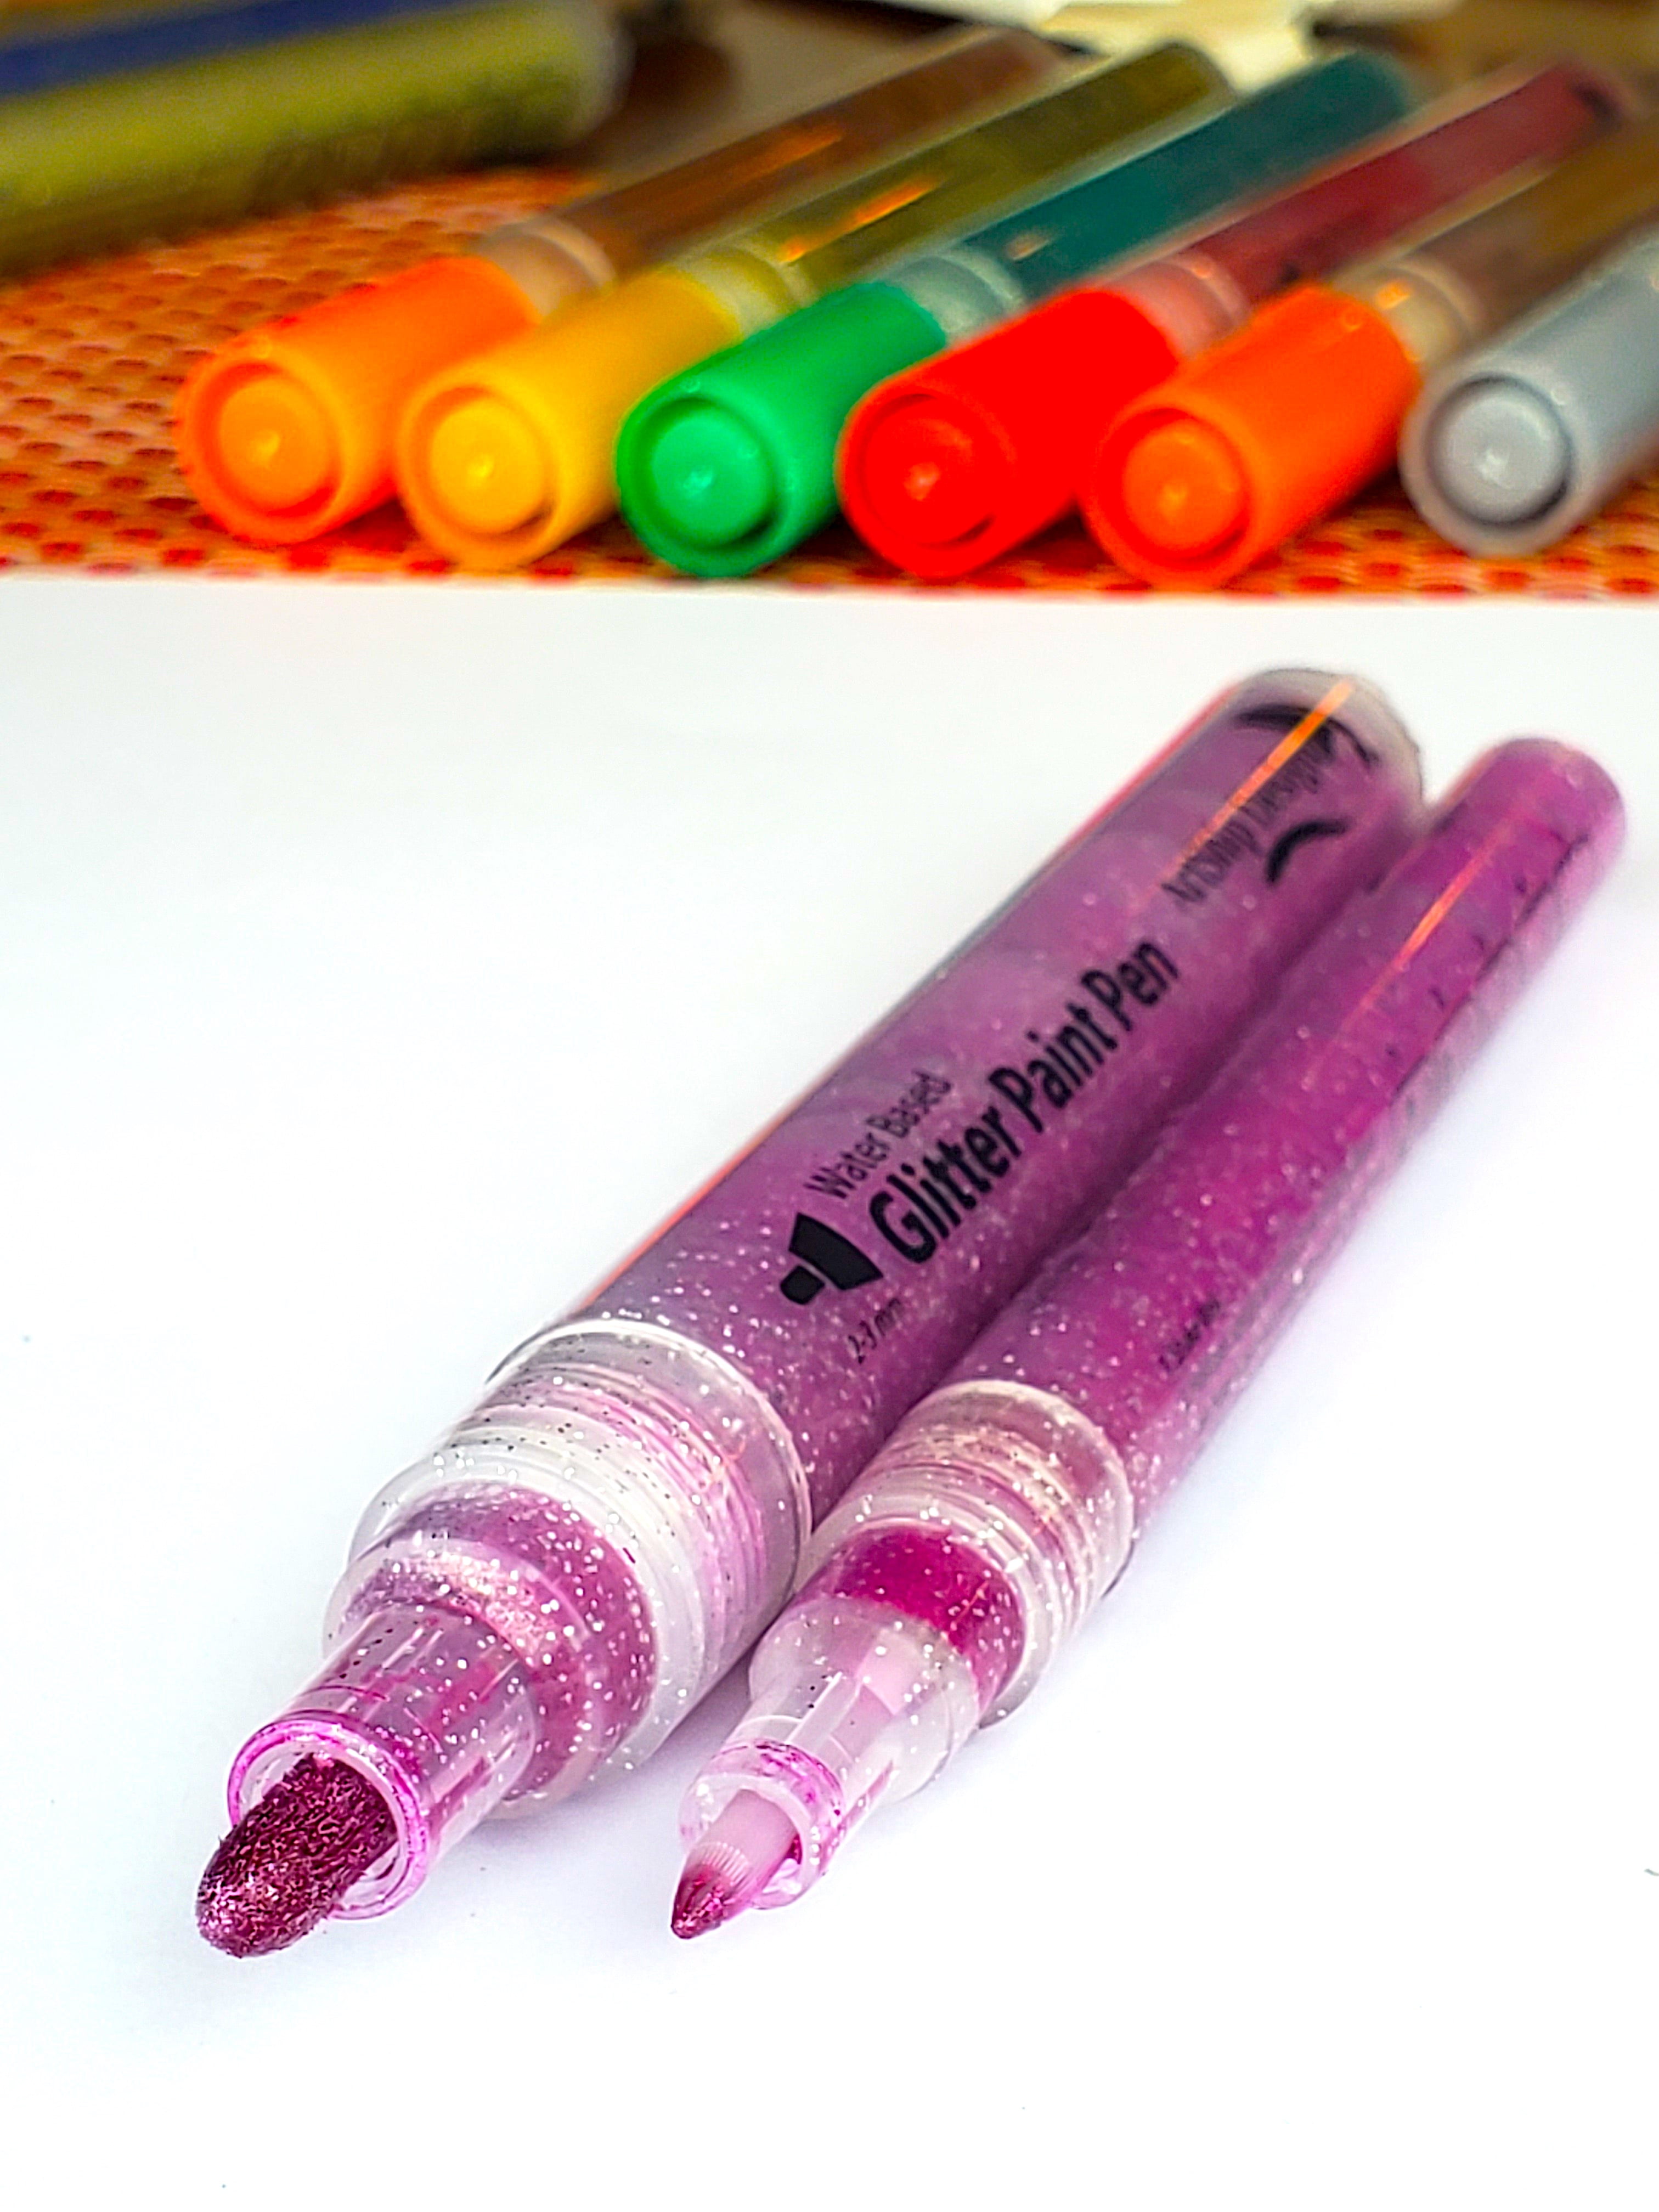 Cglowz Glow In The Dark Fluorescent Neon Paint pen - choose from 7